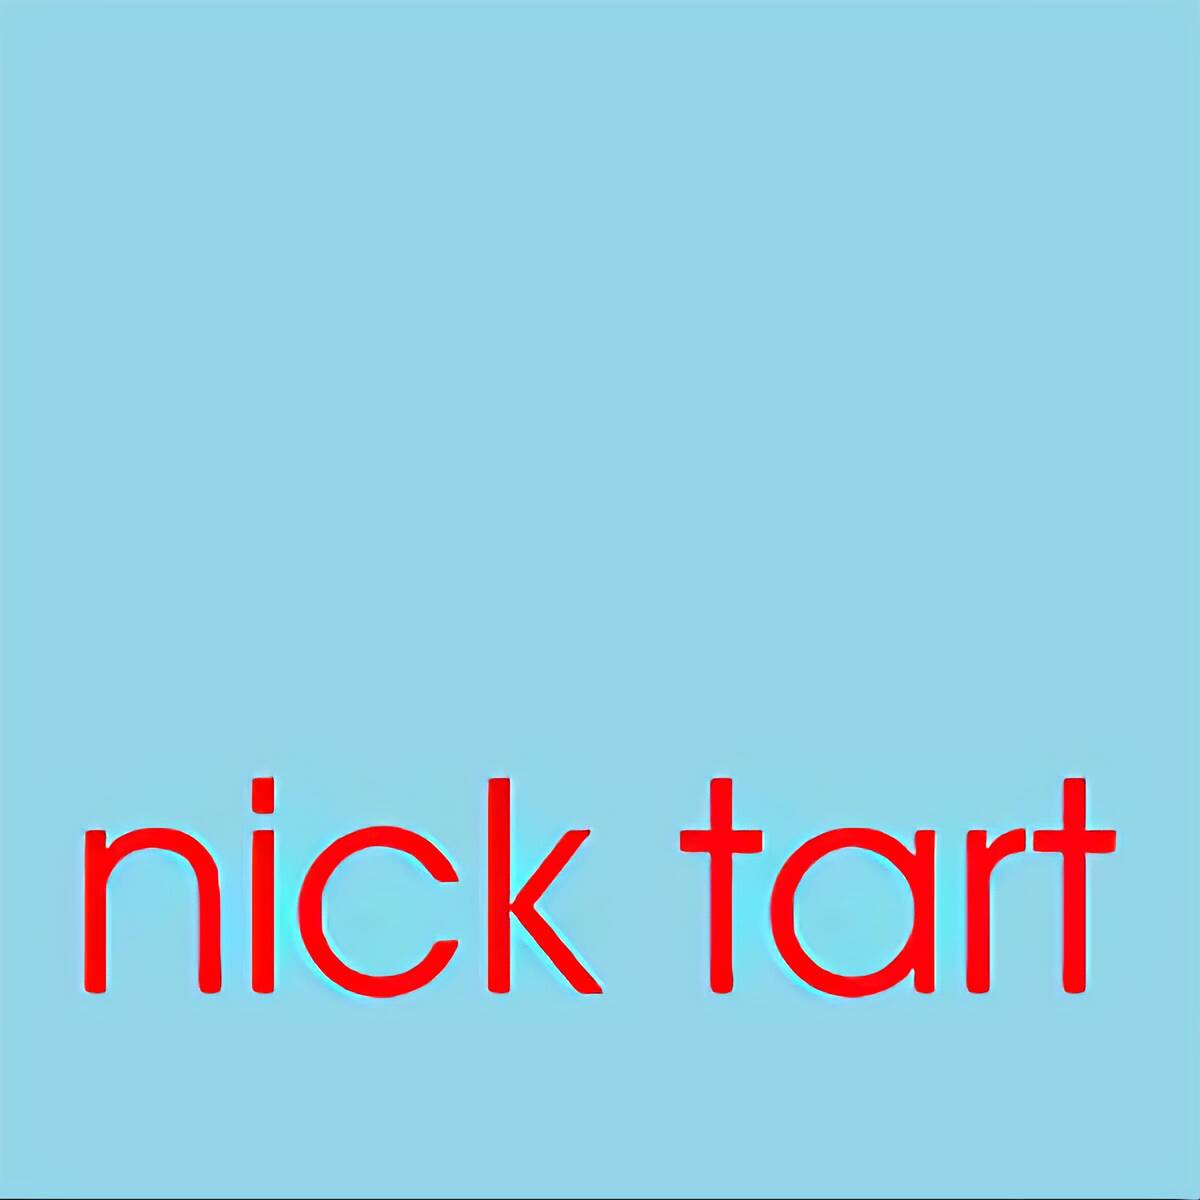 Nick Tart Estate Agents, Newport